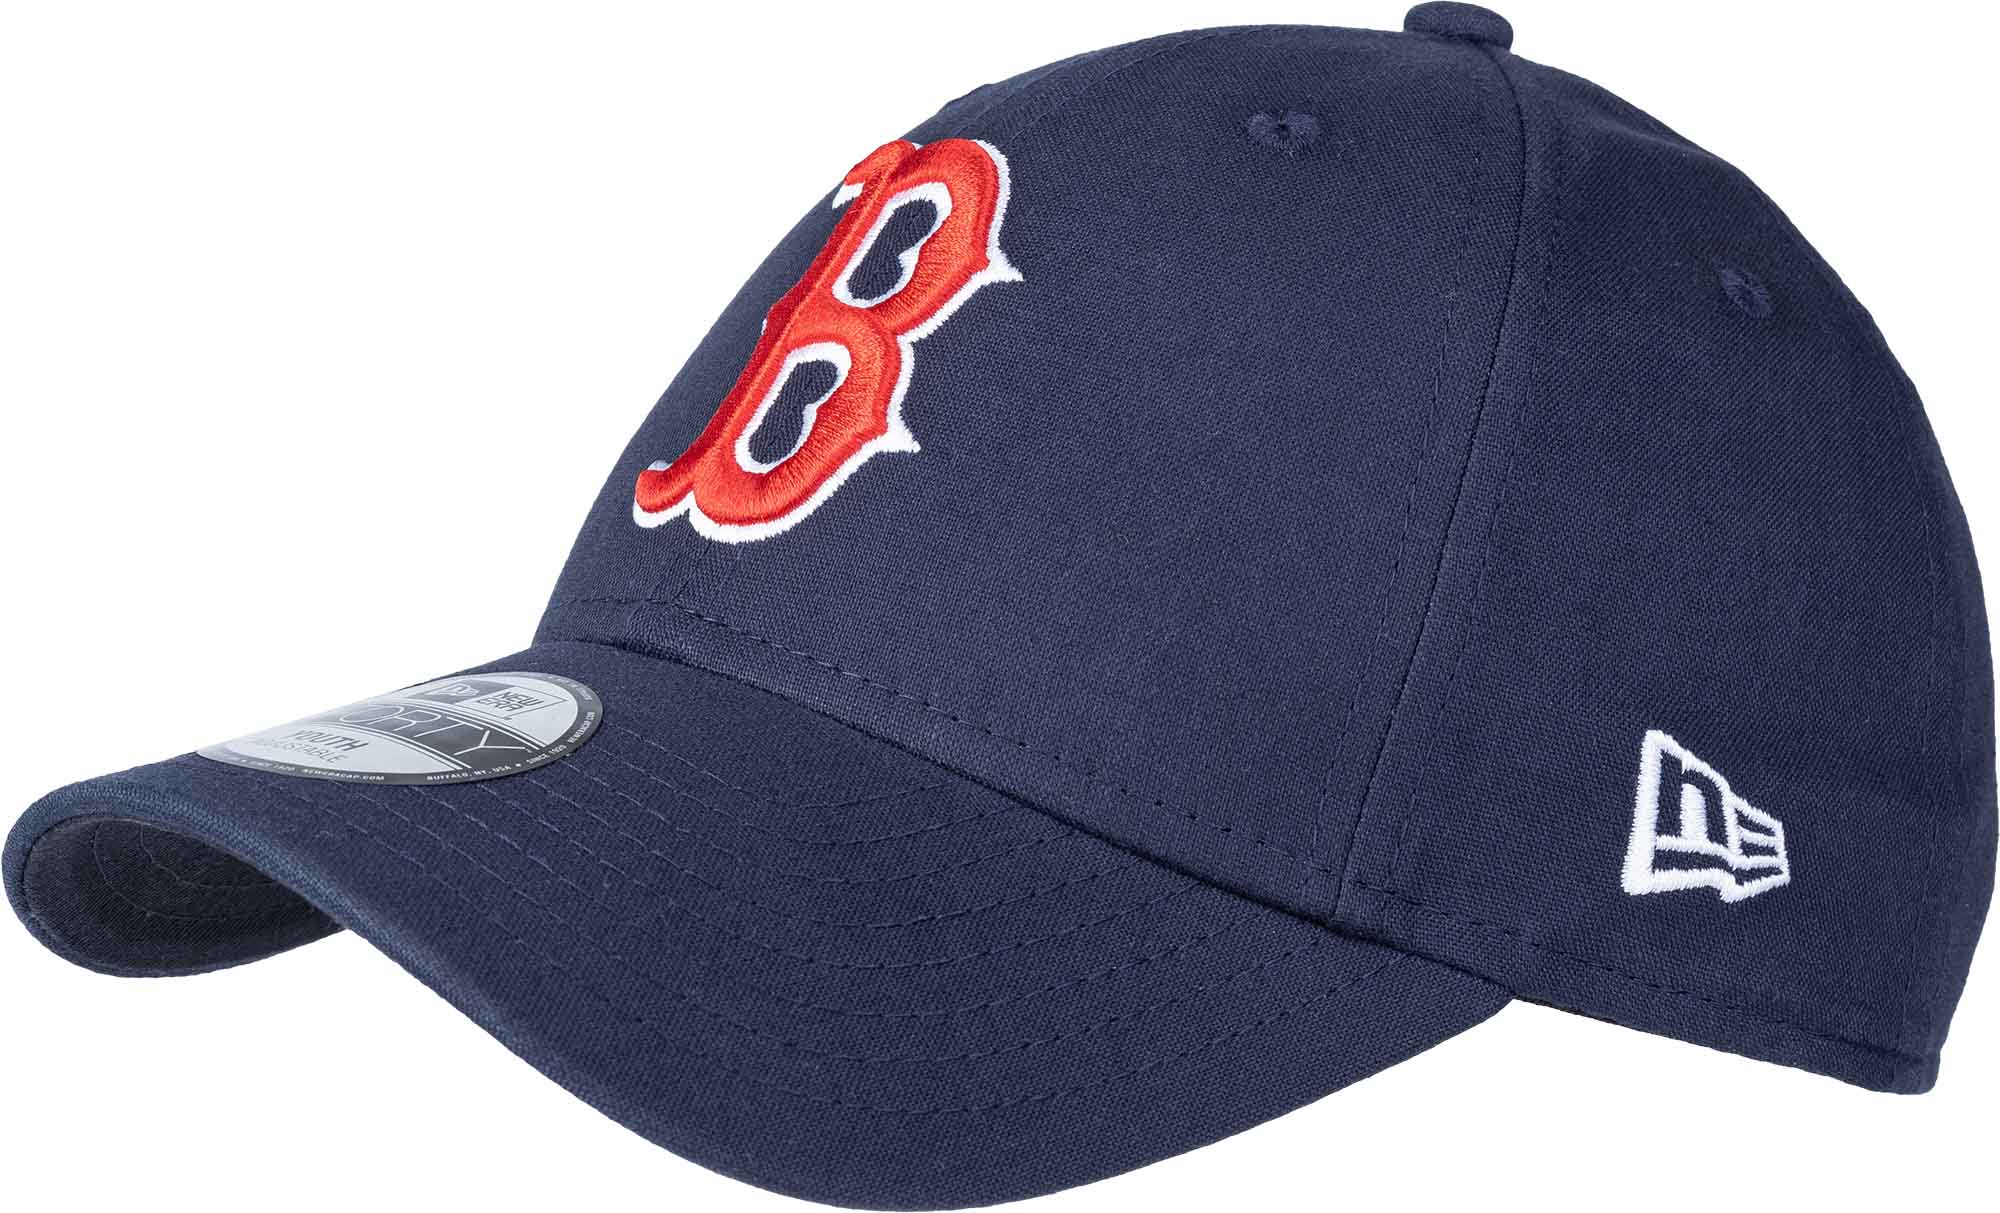 Kids' club baseball cap